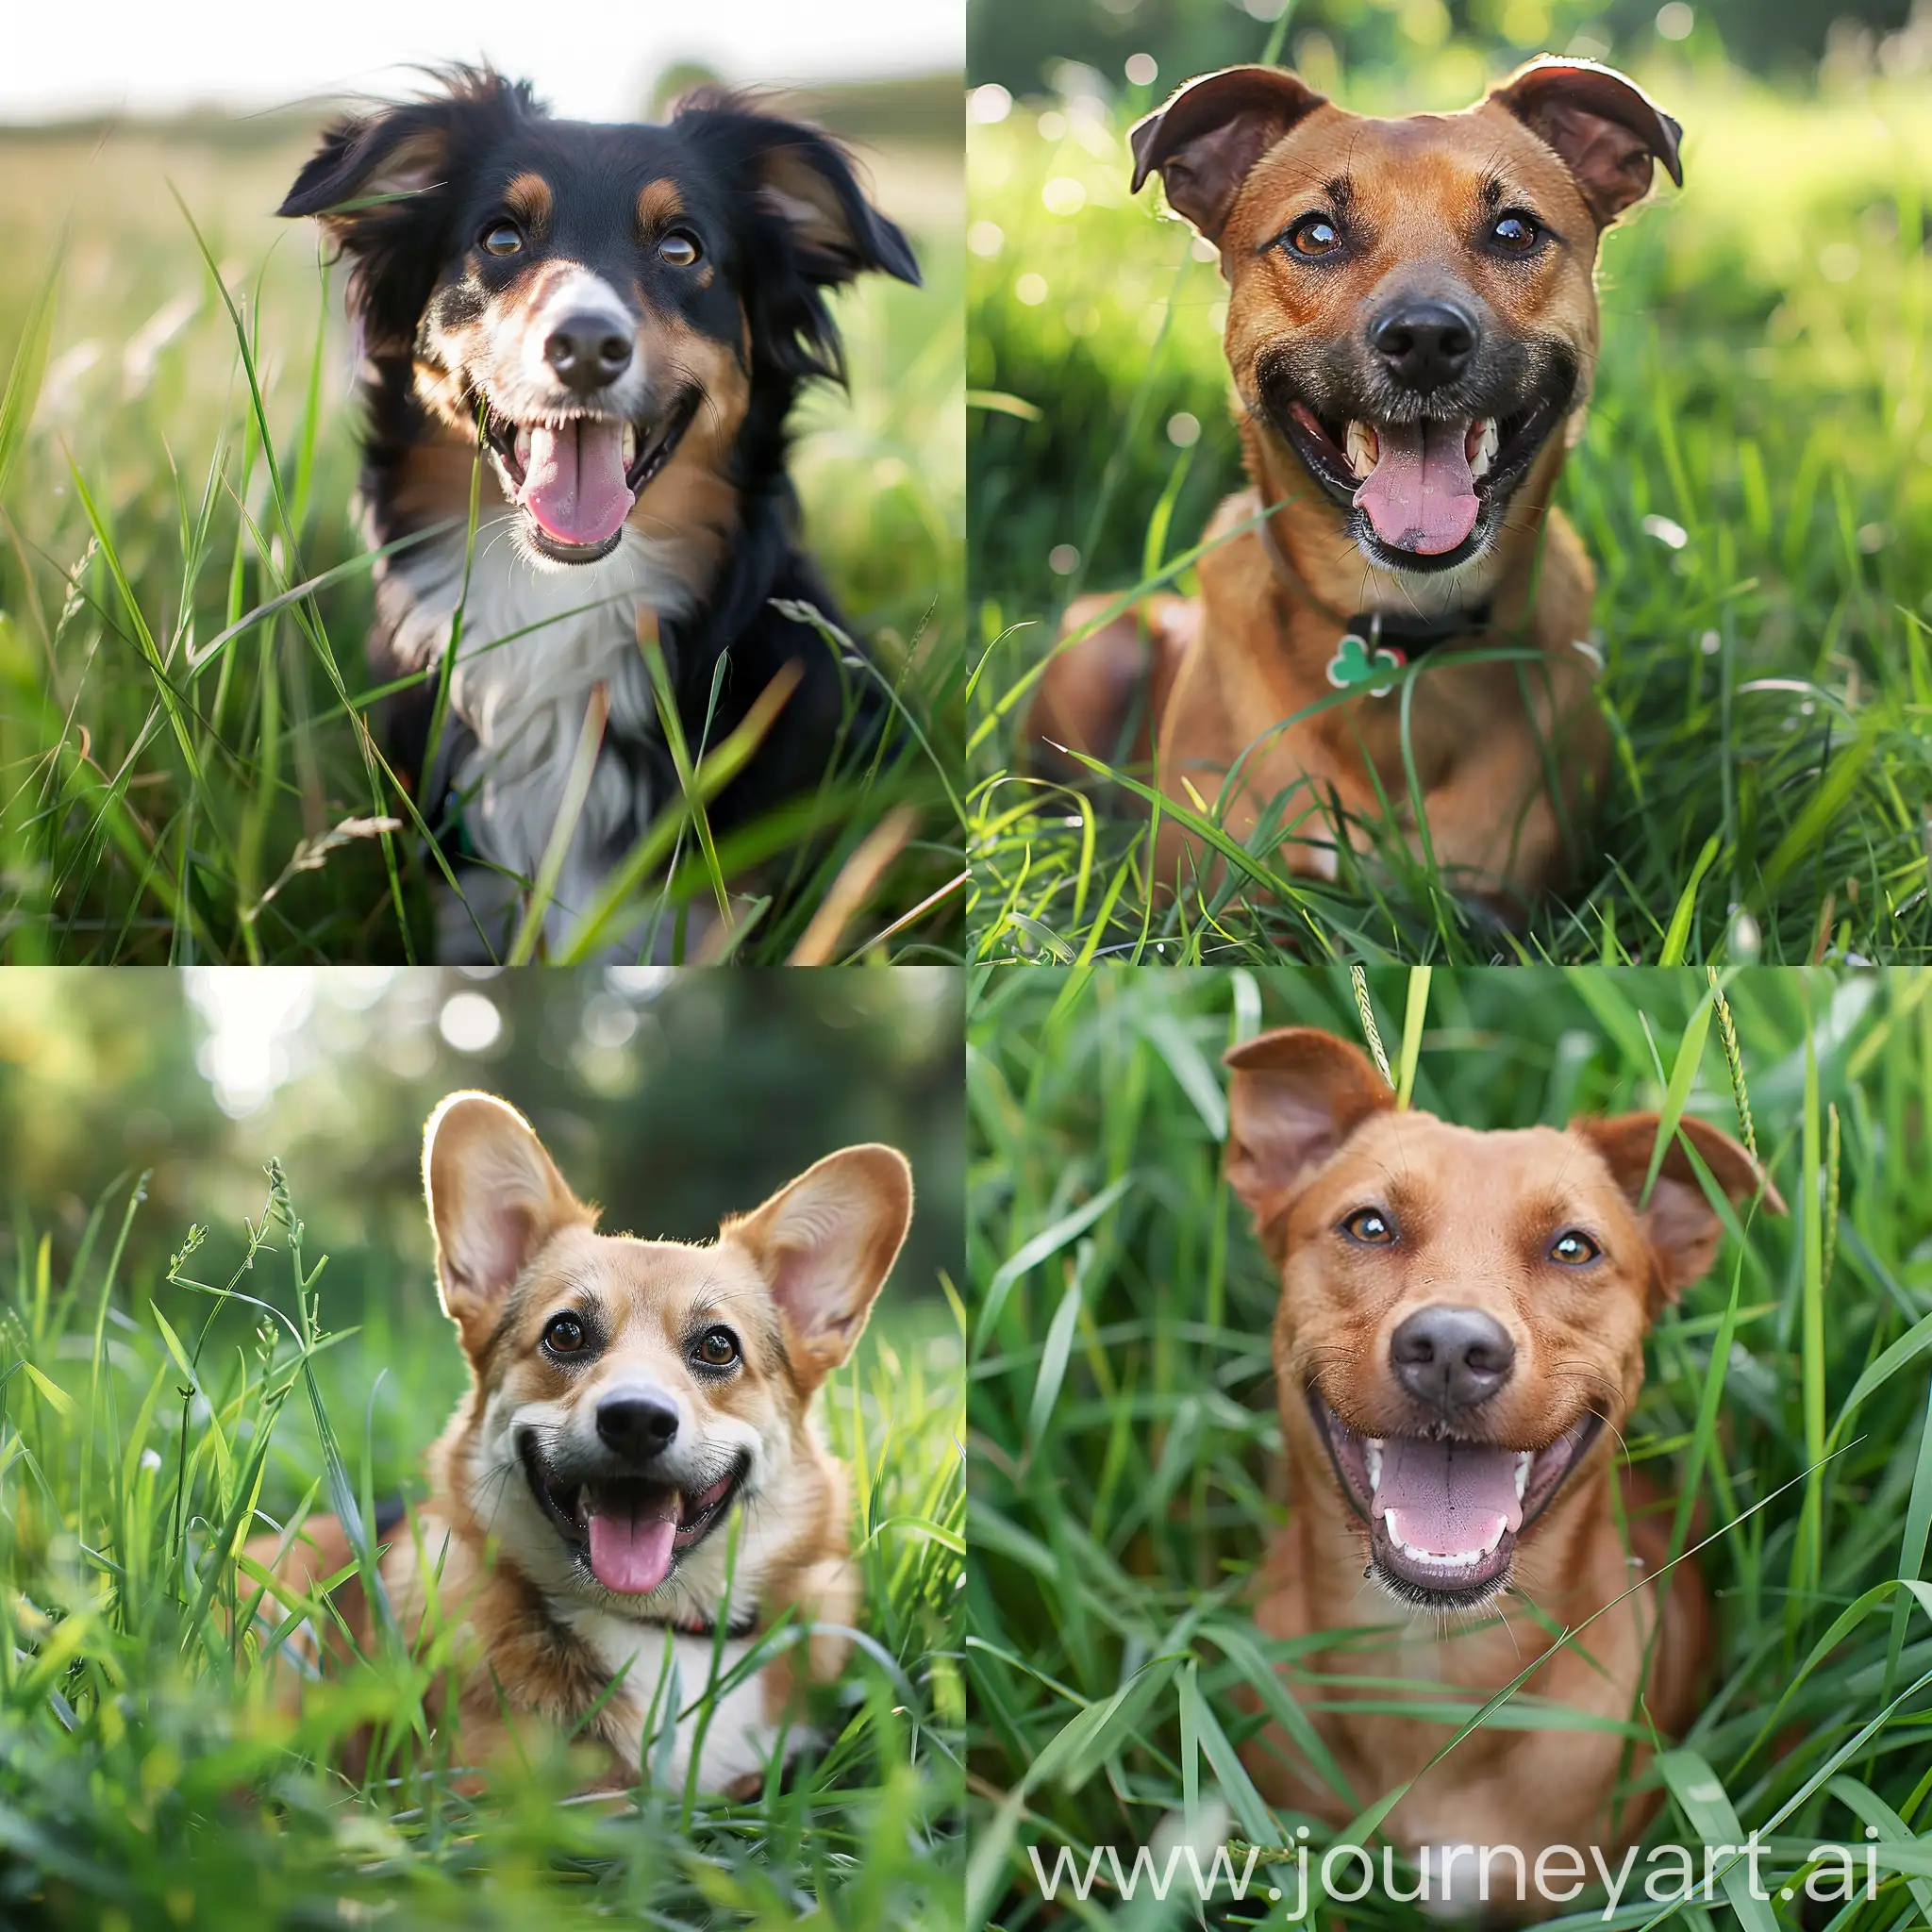 Joyful-Canine-Frolicking-in-Lush-Greenery-Vibrant-1600x550-Image